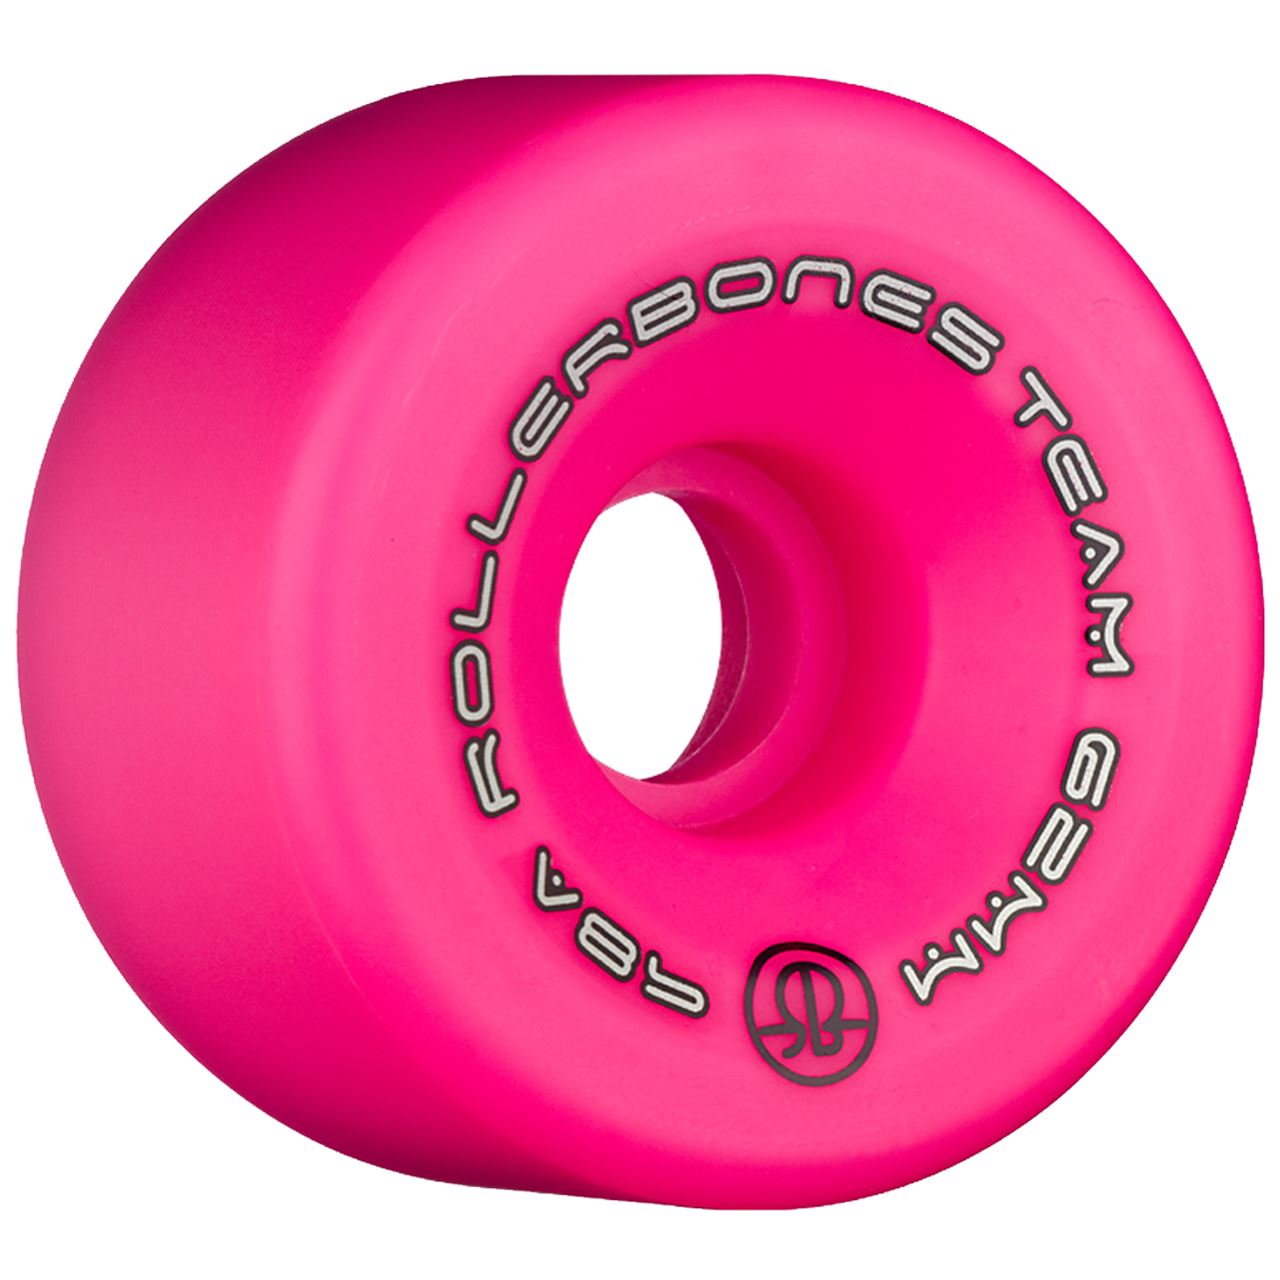 Rollerbones Team Logo Wheels Pink 62mm 98a - Set of 8